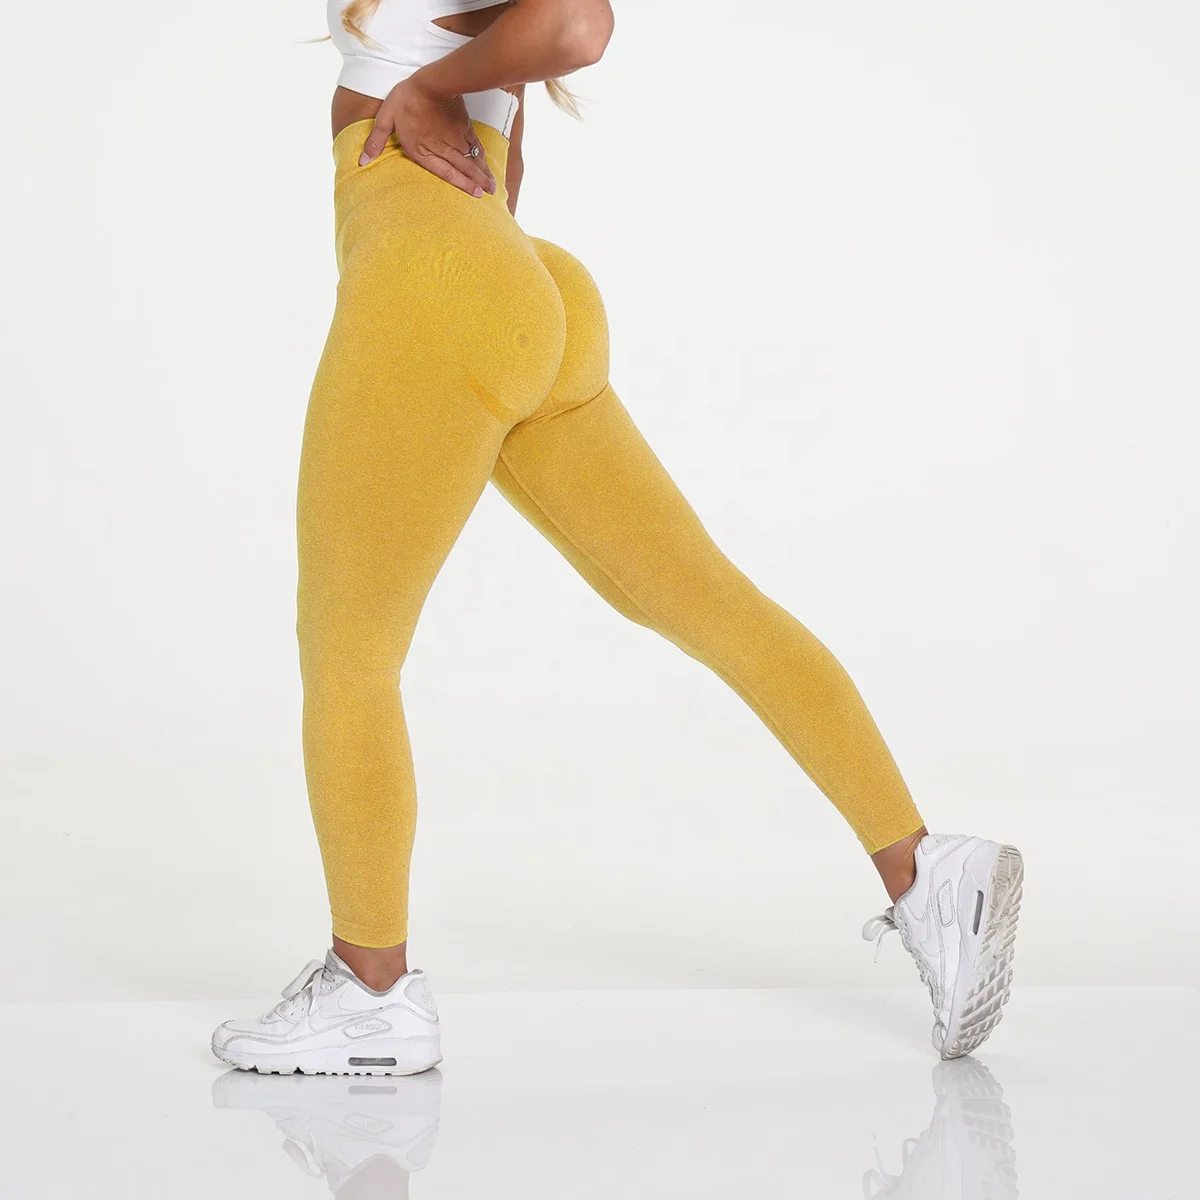 

Seamless Hip Moisture Absorption Sweat Yoga Sports Clothes Gym Pants Sex Leggings for Women Girls, Regular 14 colors